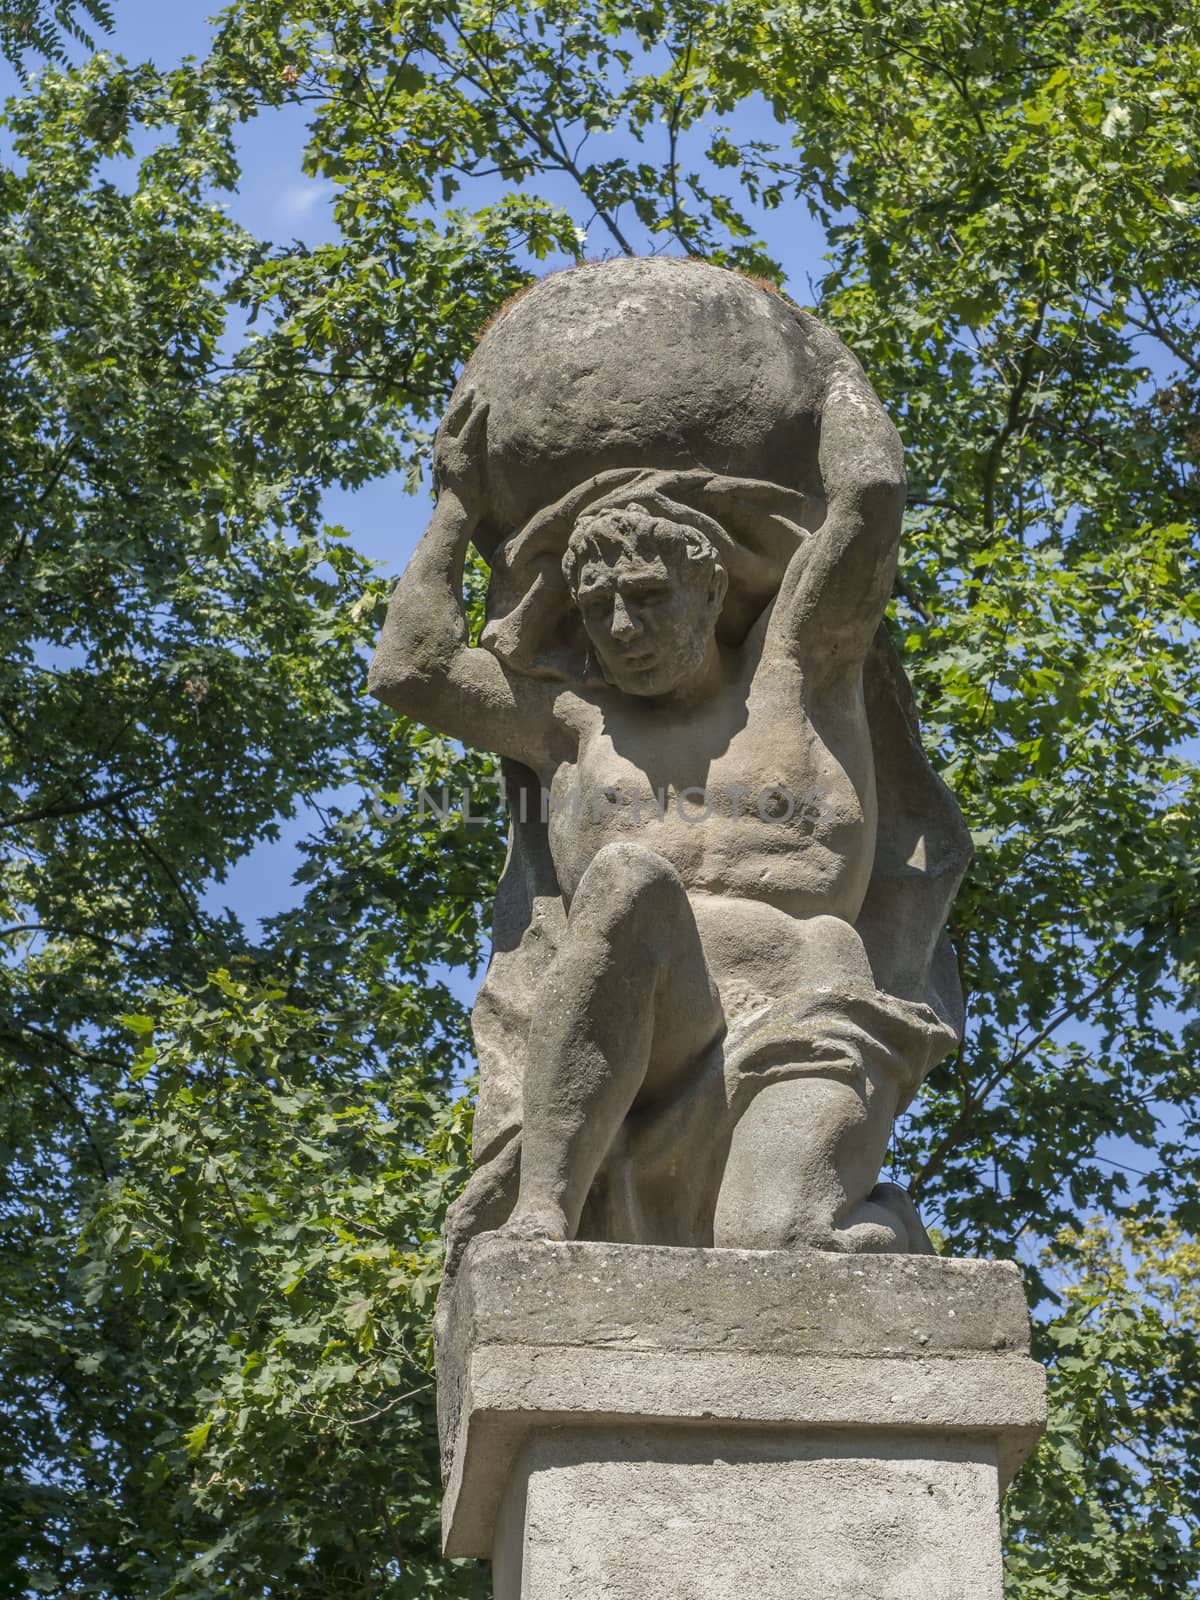 Stone men figure carrying stone, baroque statue from Greek mythology of Sisyphus or Sisyphos by Henkeova